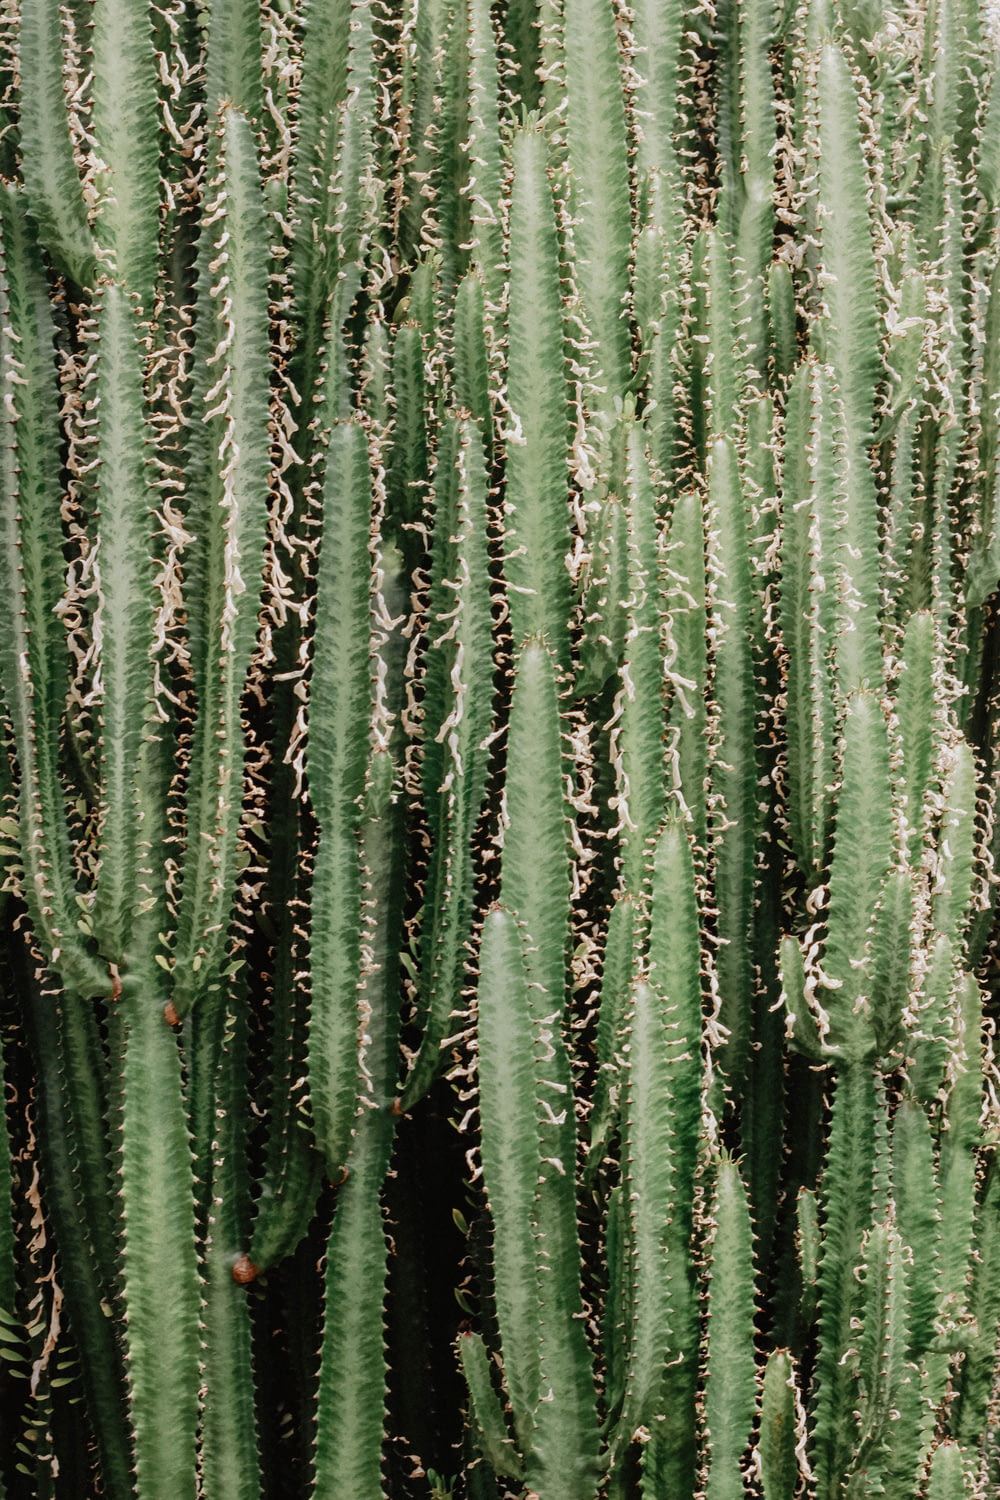 green cactus plant close-up photo